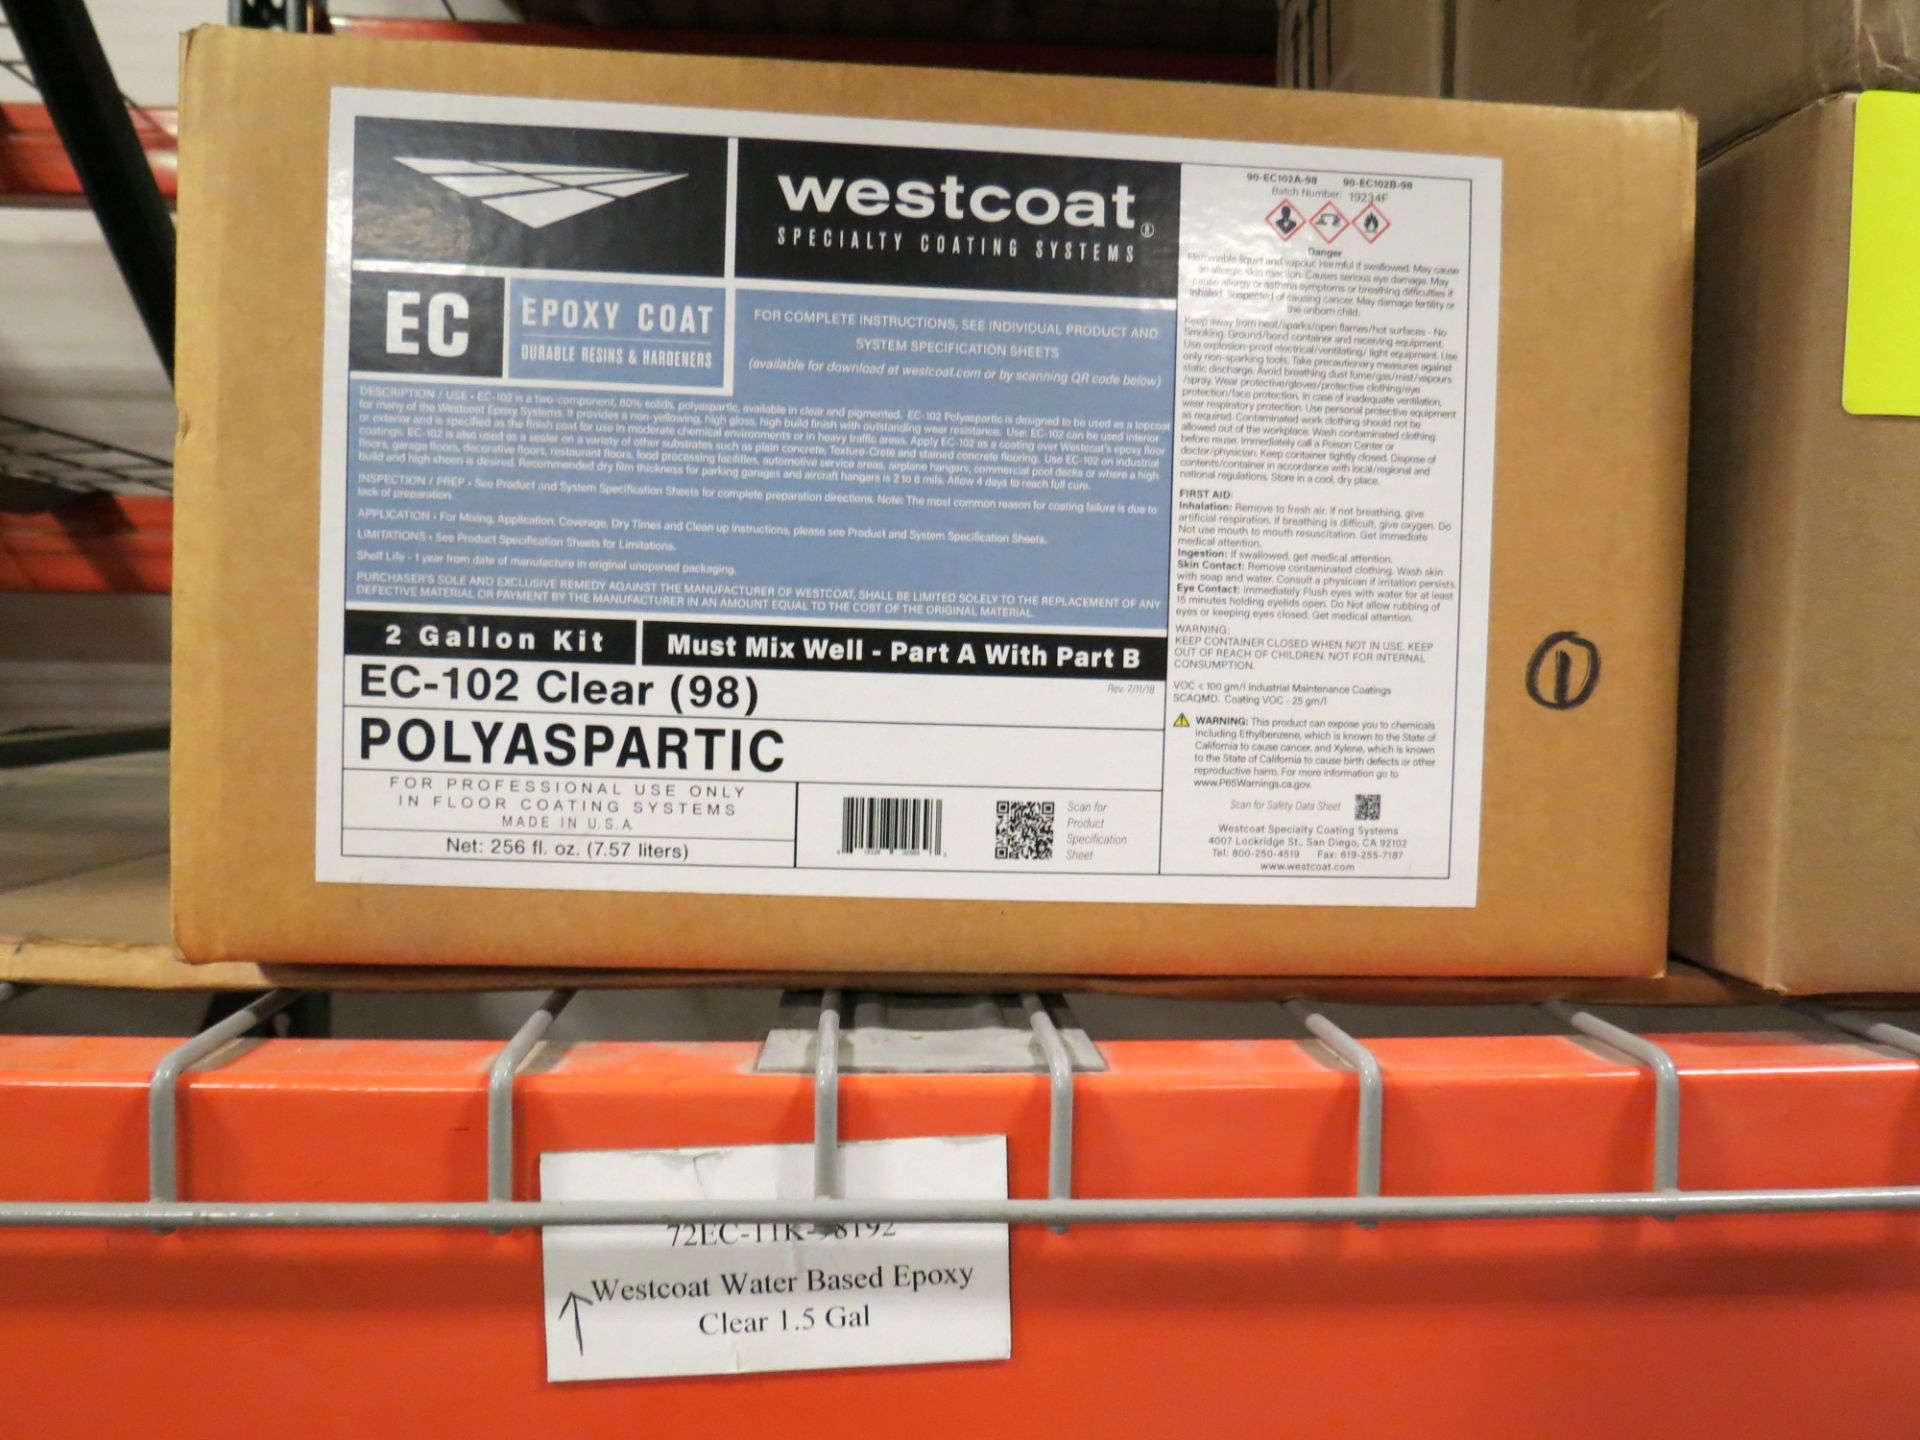 Lot Westcoat Product, 1x 72EC102k-98-256 Westcoat Polyaspartic Clear 2gal Kit, 8x 72EC-12K-98-102 - Image 2 of 4